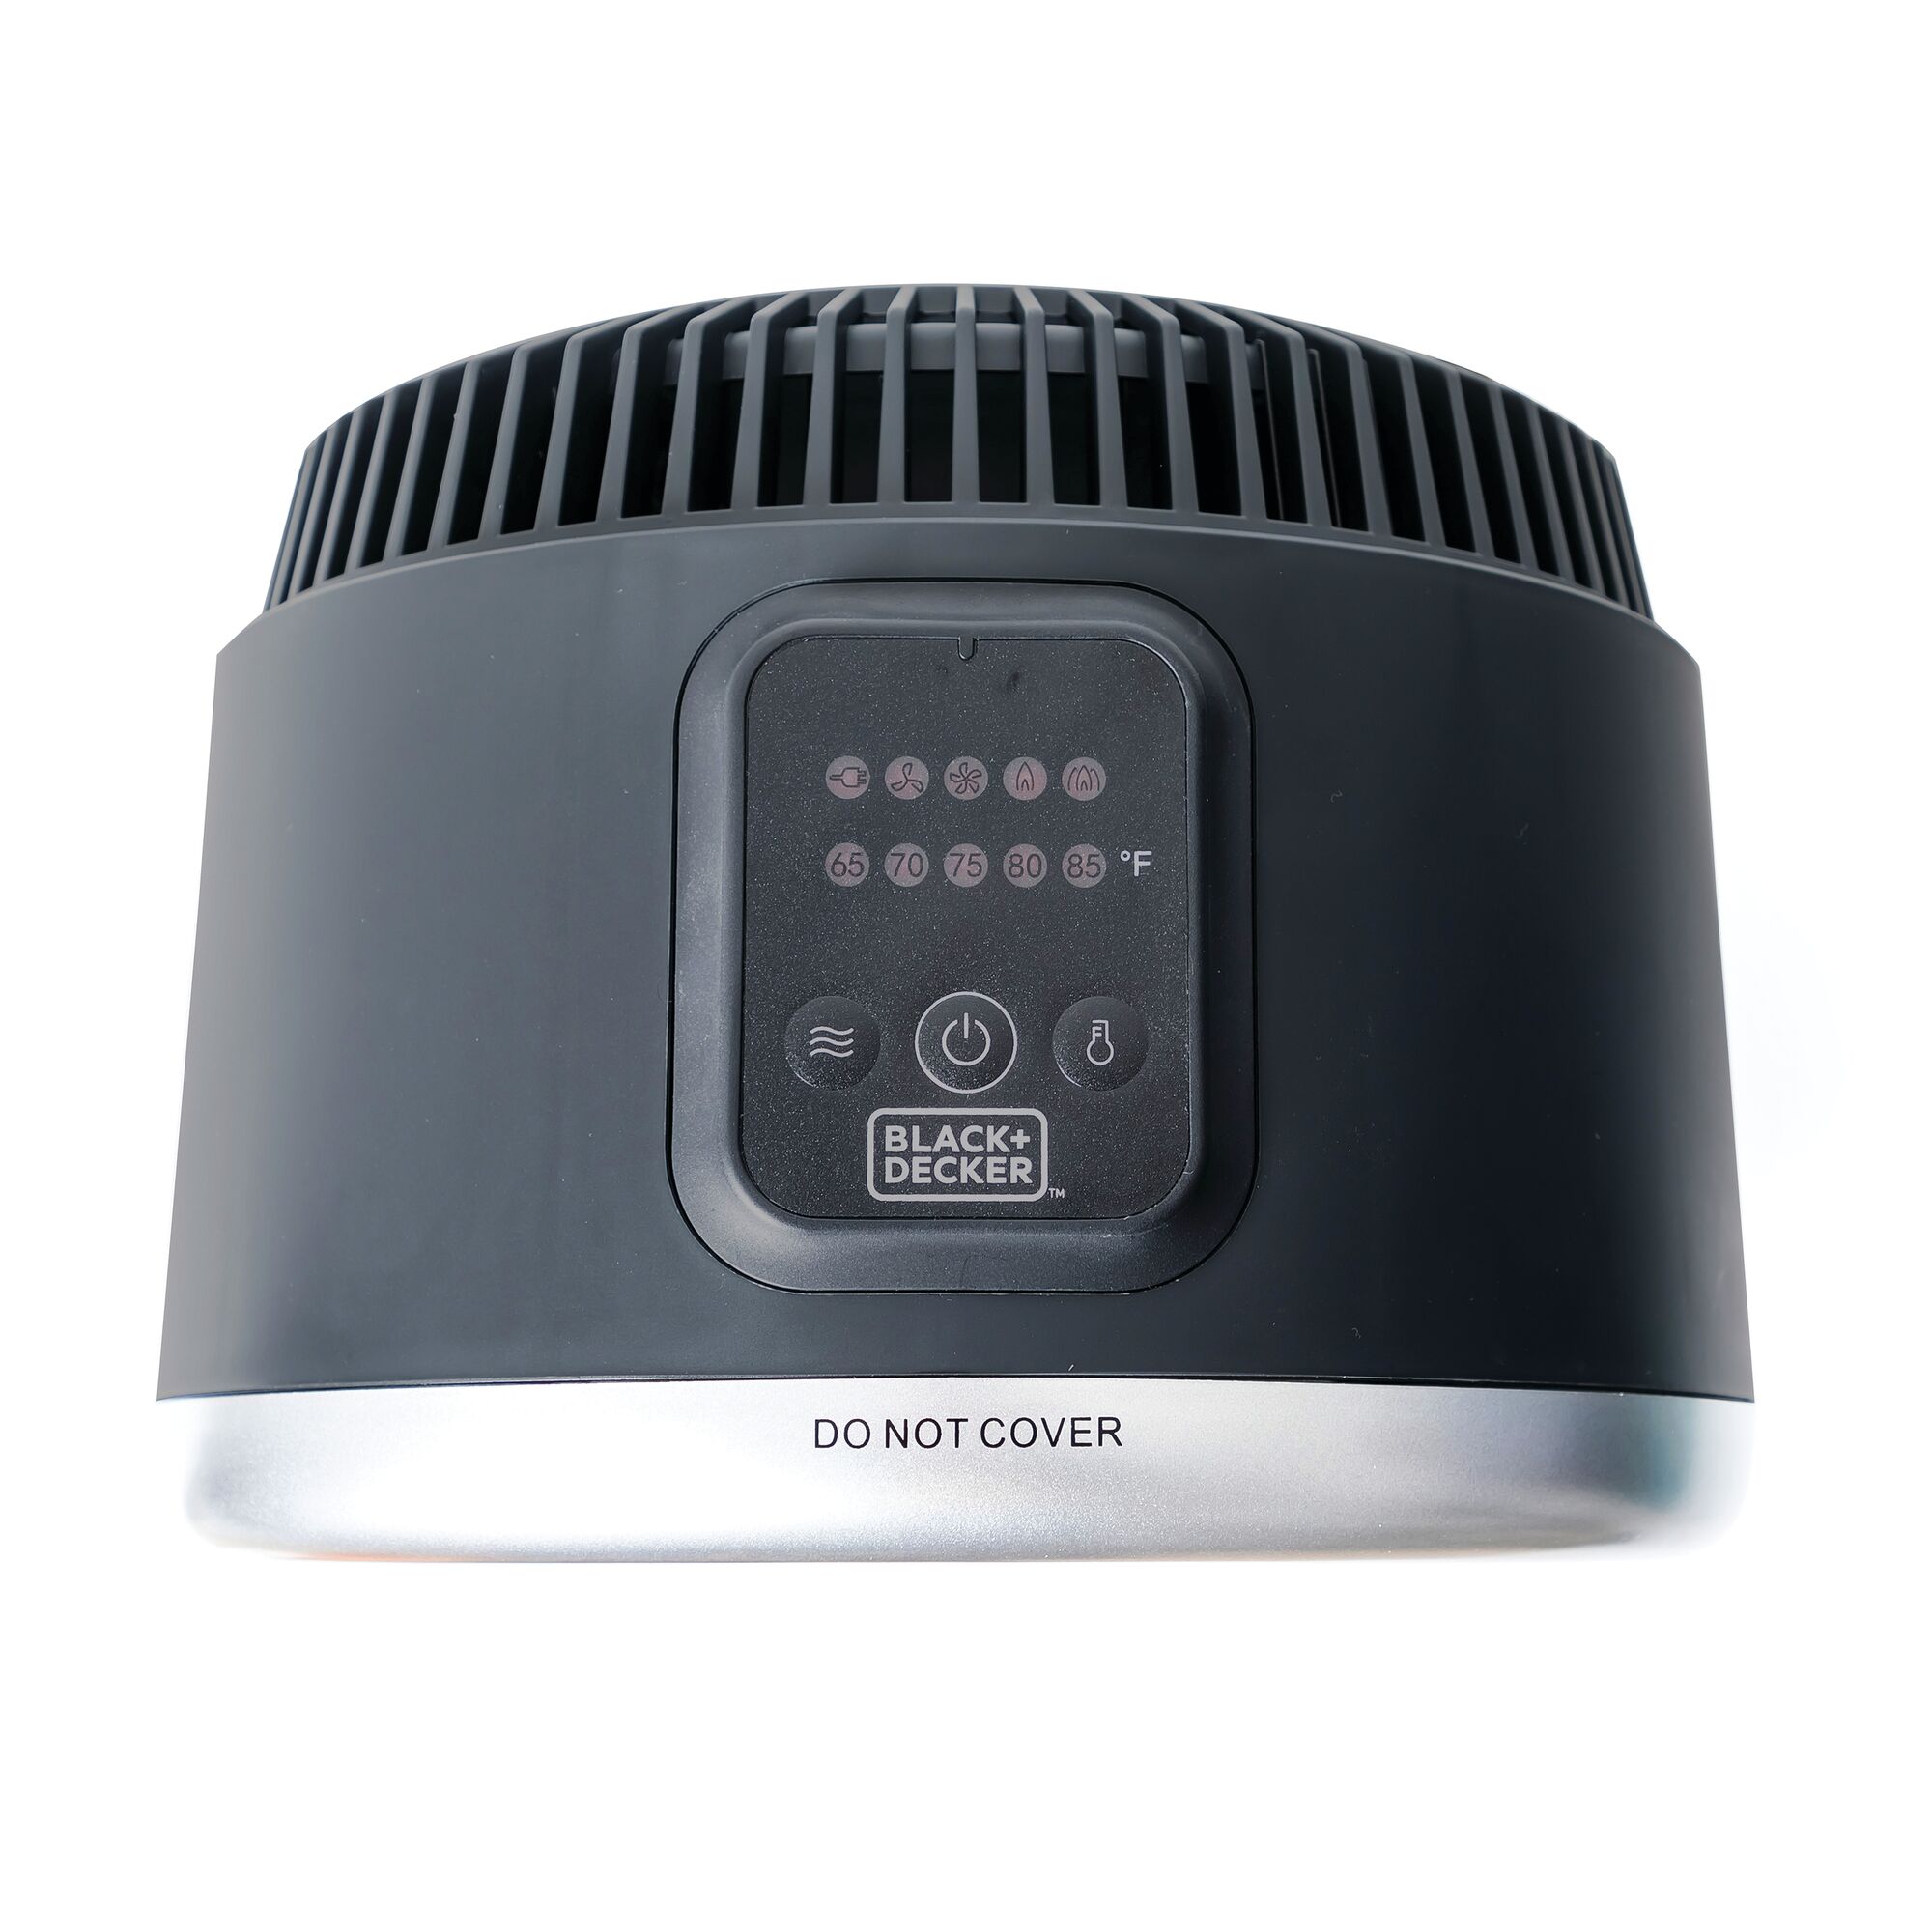 Digital turbo portable heater fan combo 2 in 1 electric personal mini space heater.\n